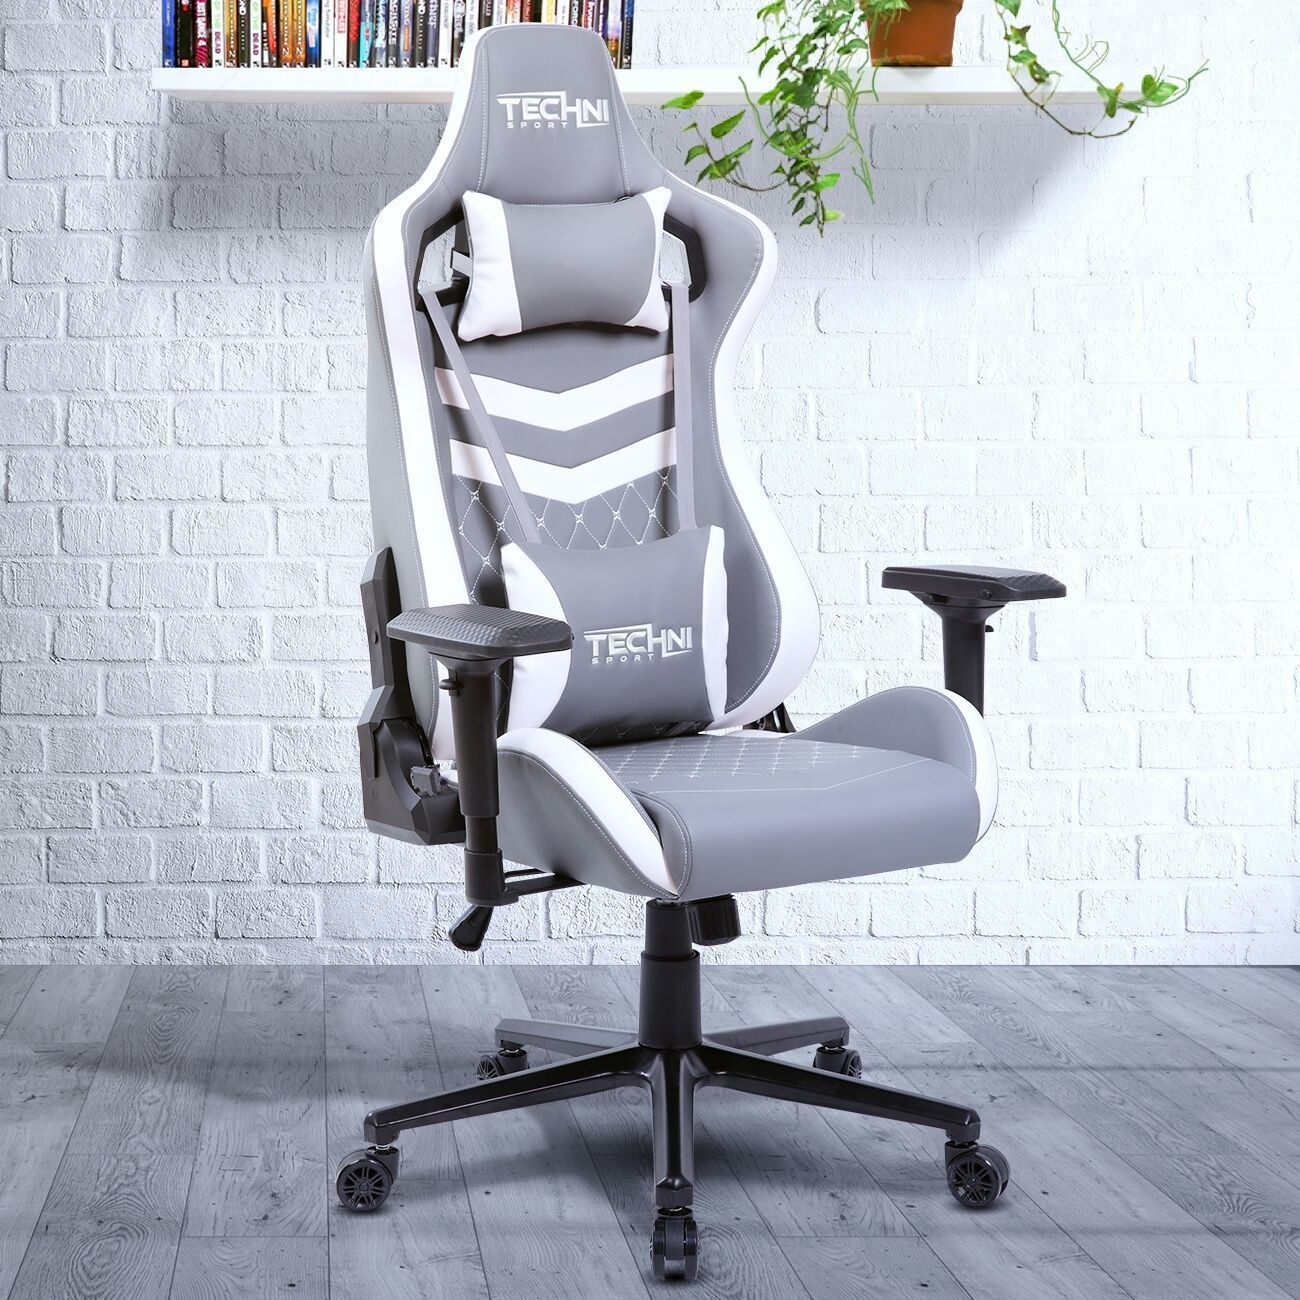 Techni Sport Ergonomic High Back Gaming Chair